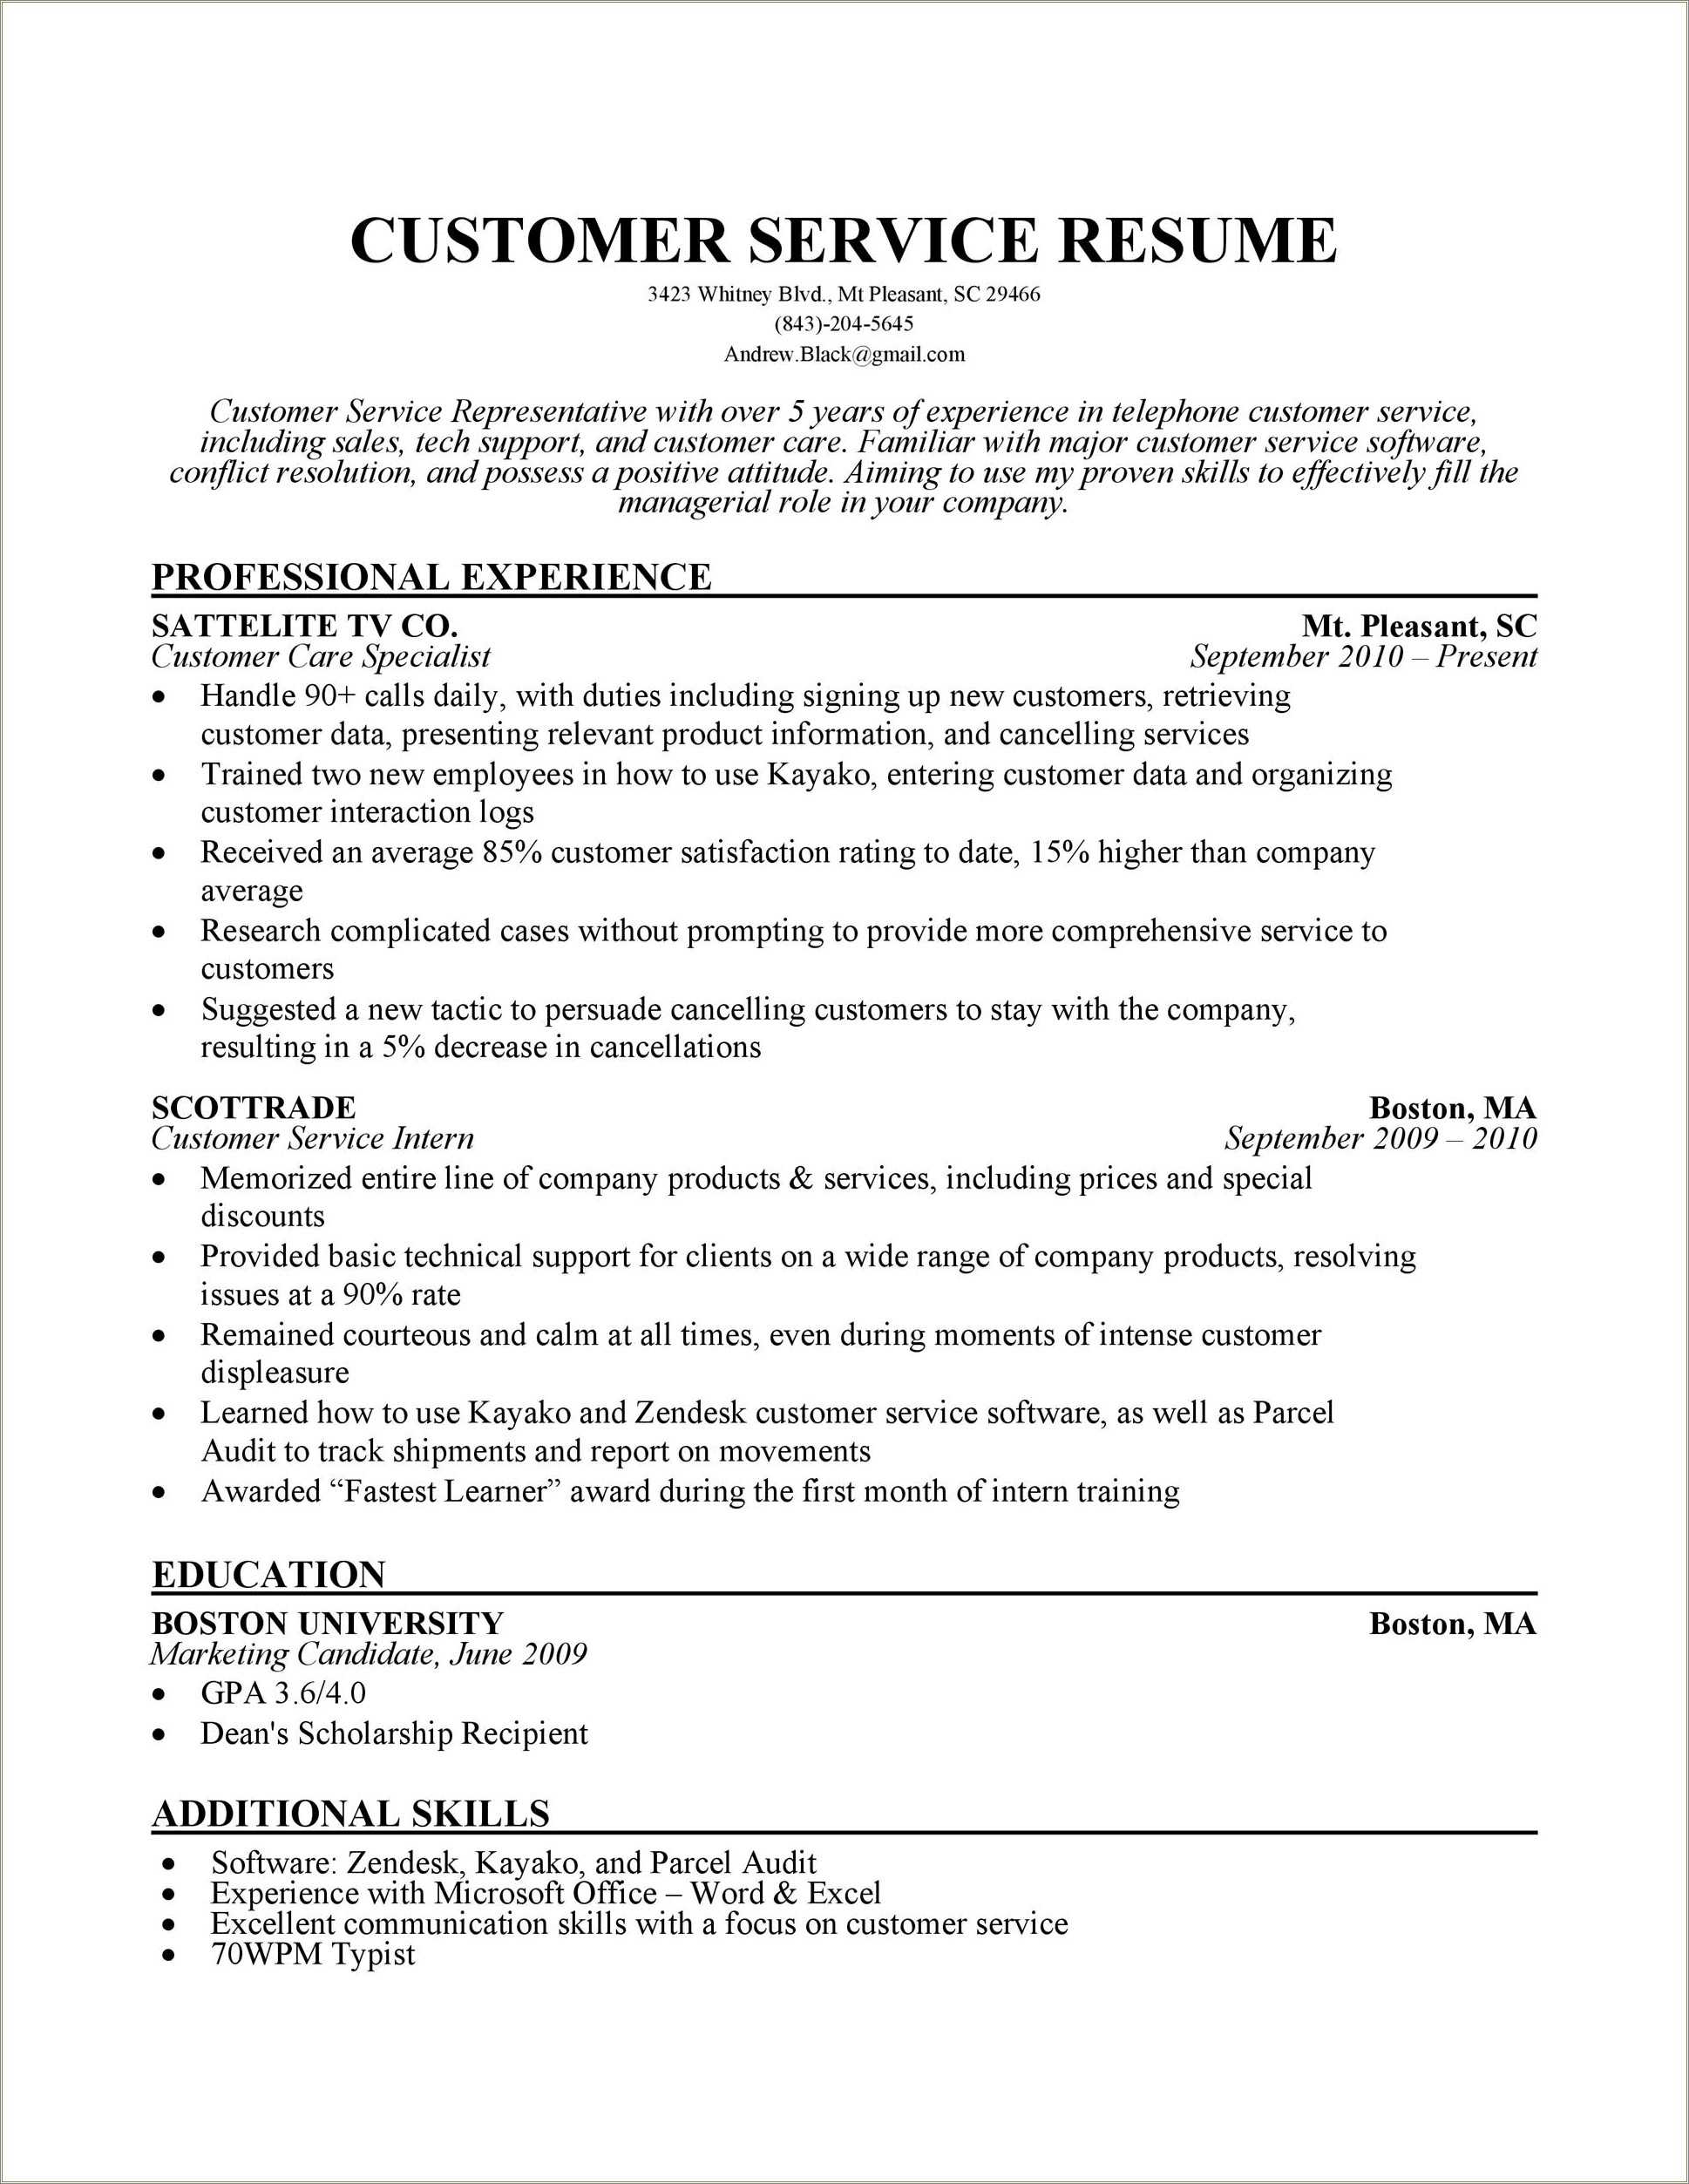 Resume Additional Skills Section Customer Service